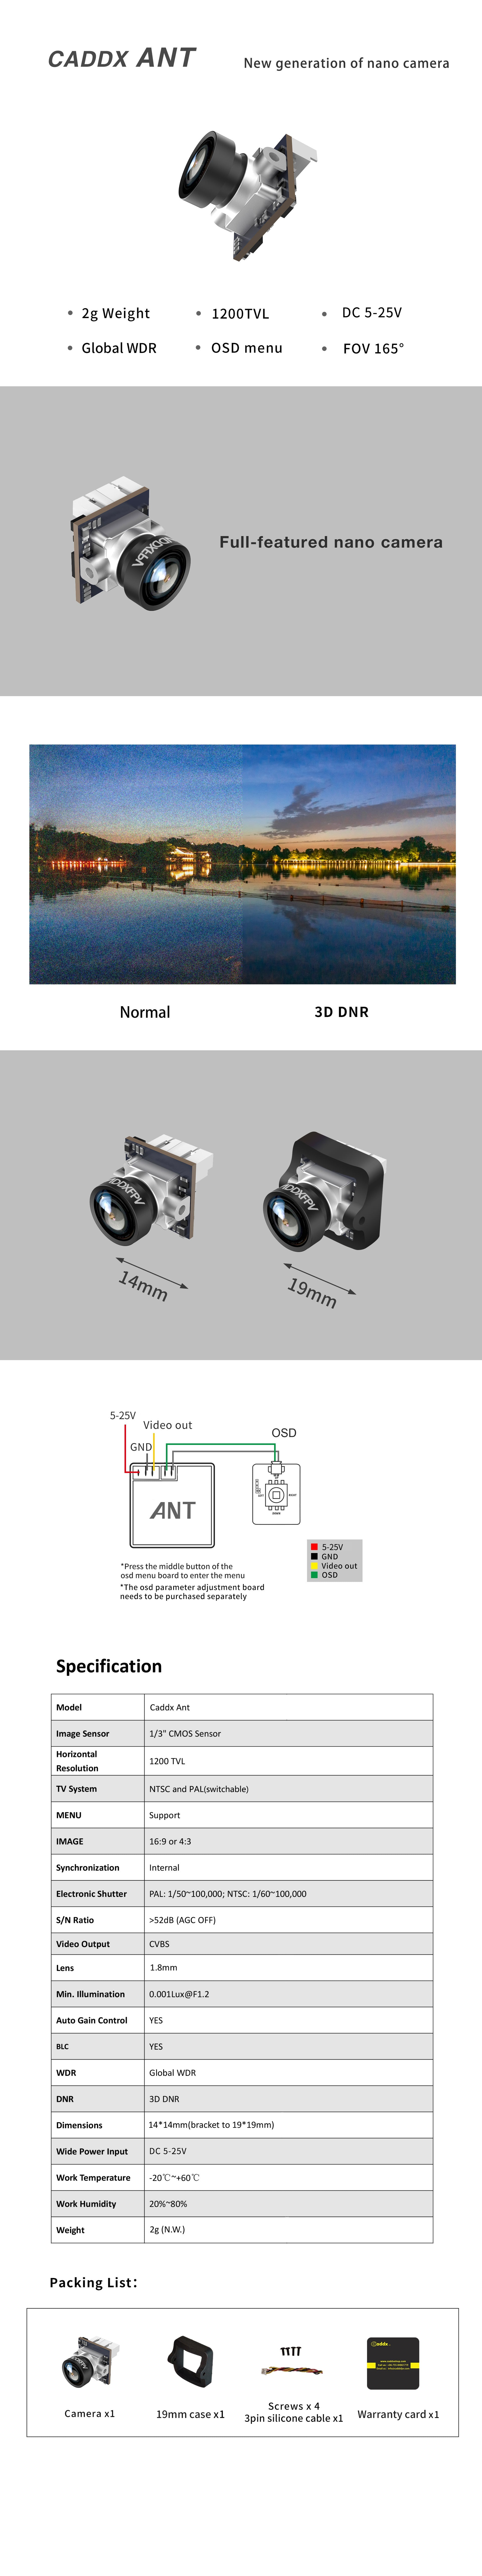 CADDXFPV Ant Analog Camera, CMOS Senso Horizontal 1200 TVL Resolution System NTSC and 